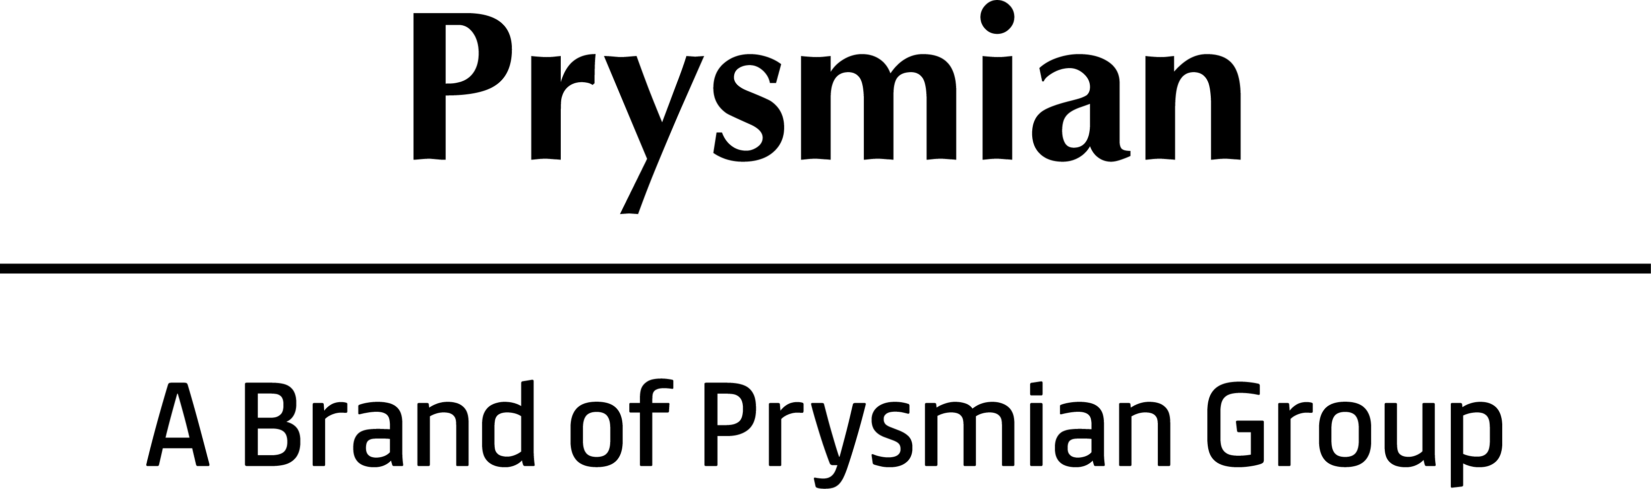 Prysmian cables logo